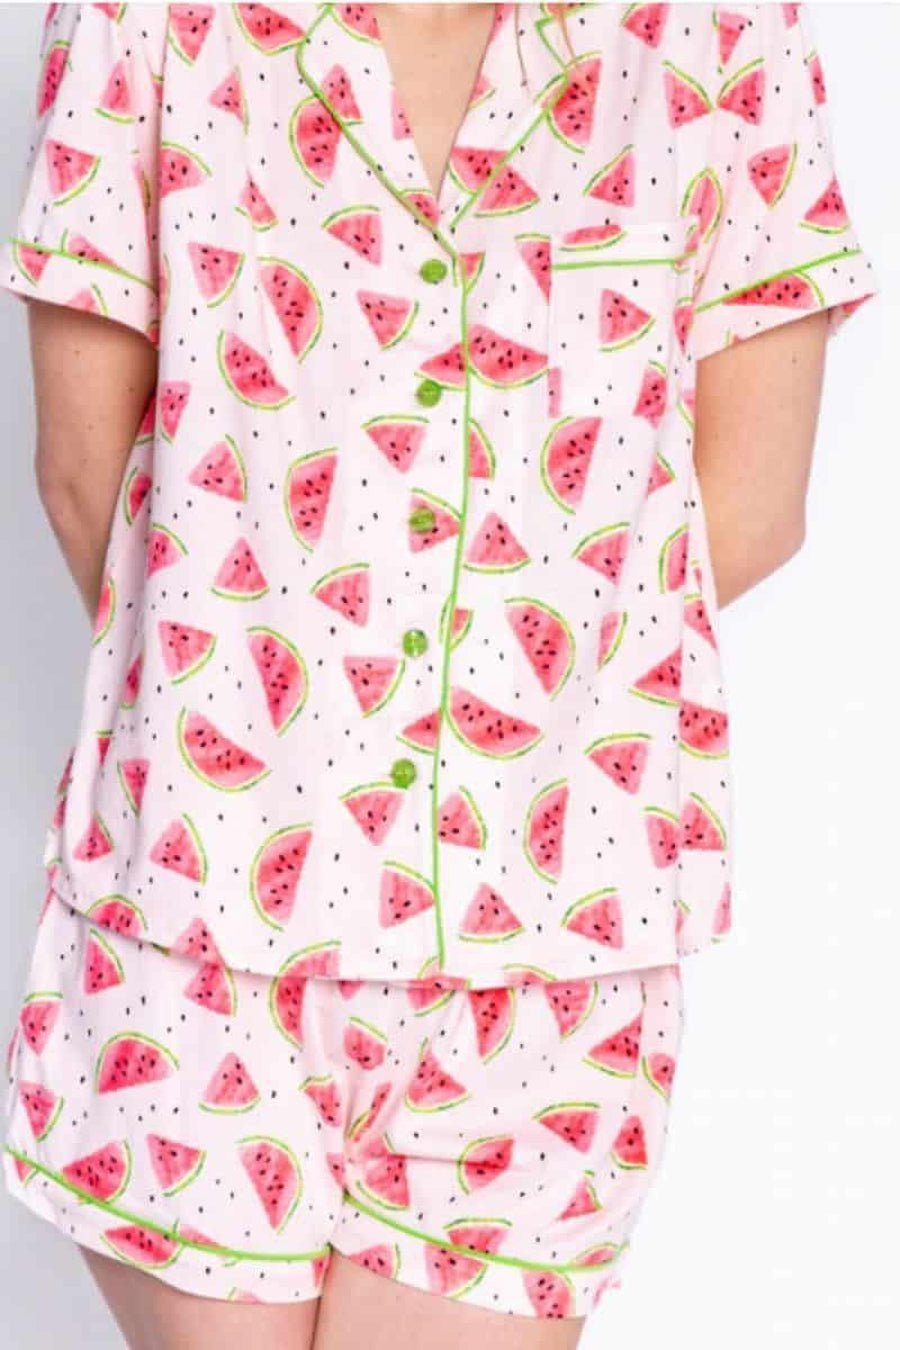 Shop PJ Salvage PJ Set in Watermelon Print - Premium Pyjamas from PJ Salvage Online now at Spoiled Brat 